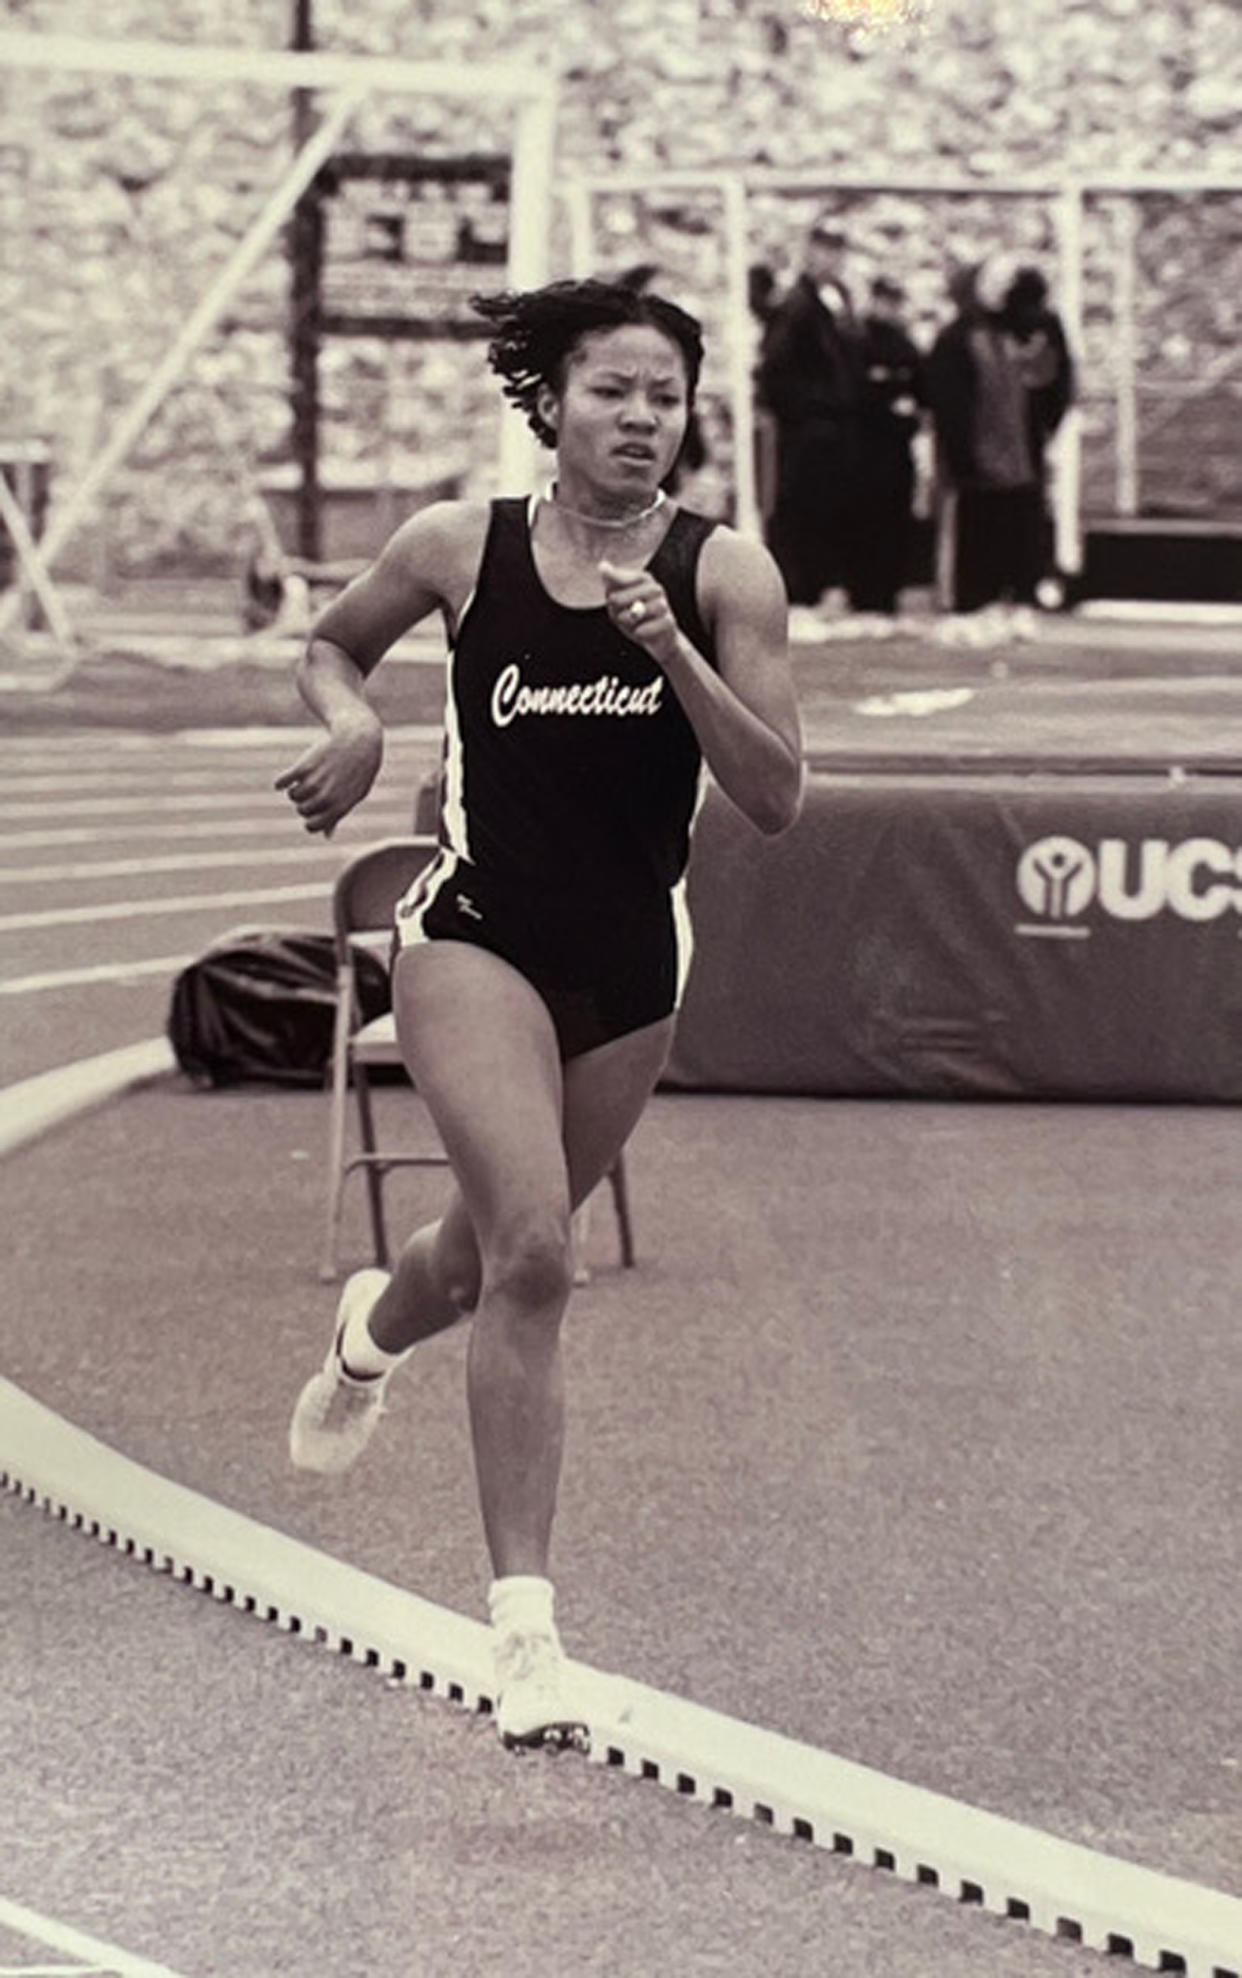 Trisha Bailey runs track at the University of Connecticut. (Courtesy Dr. Trisha Bailey)